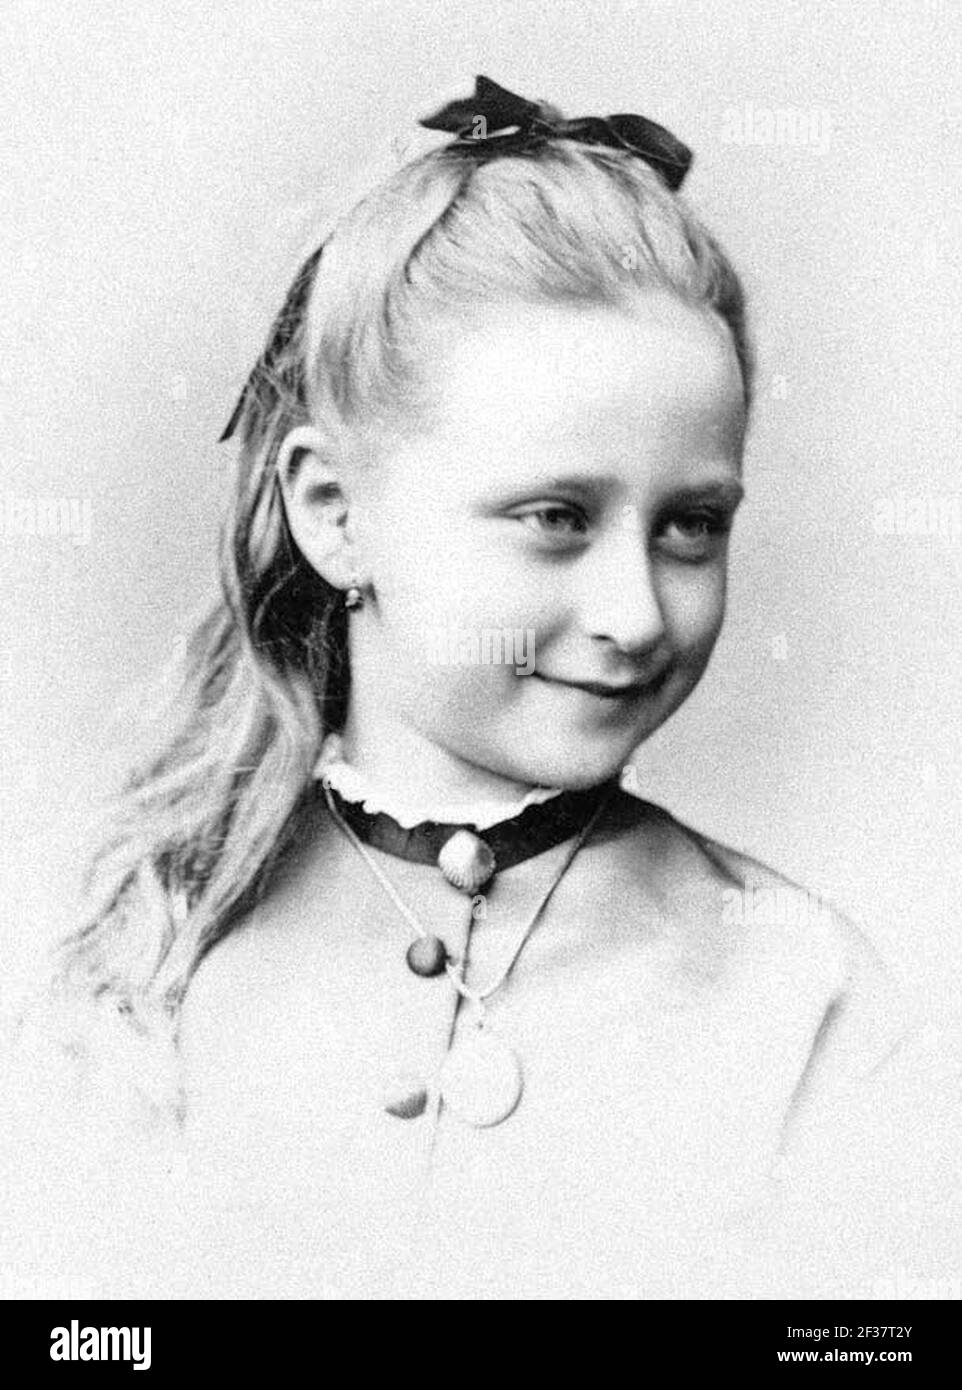 Princess Elisabeth of Hesse as a young girl 1871 Stock Photo - Alamy